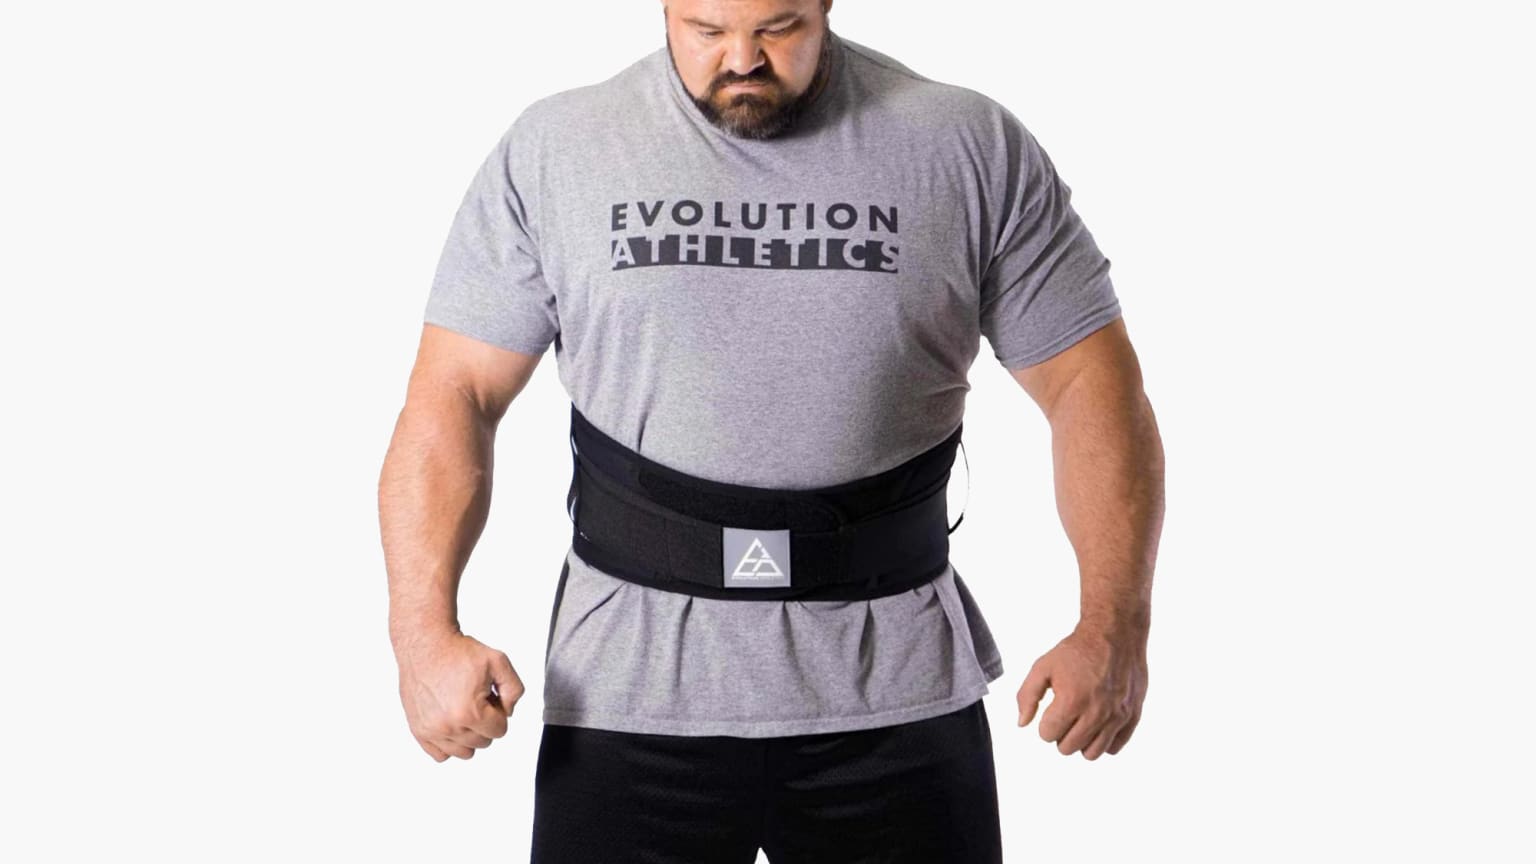 EVO Weight Lifting Neoprene Gym Belts GEL Back Support Straps Wraps Waist Train